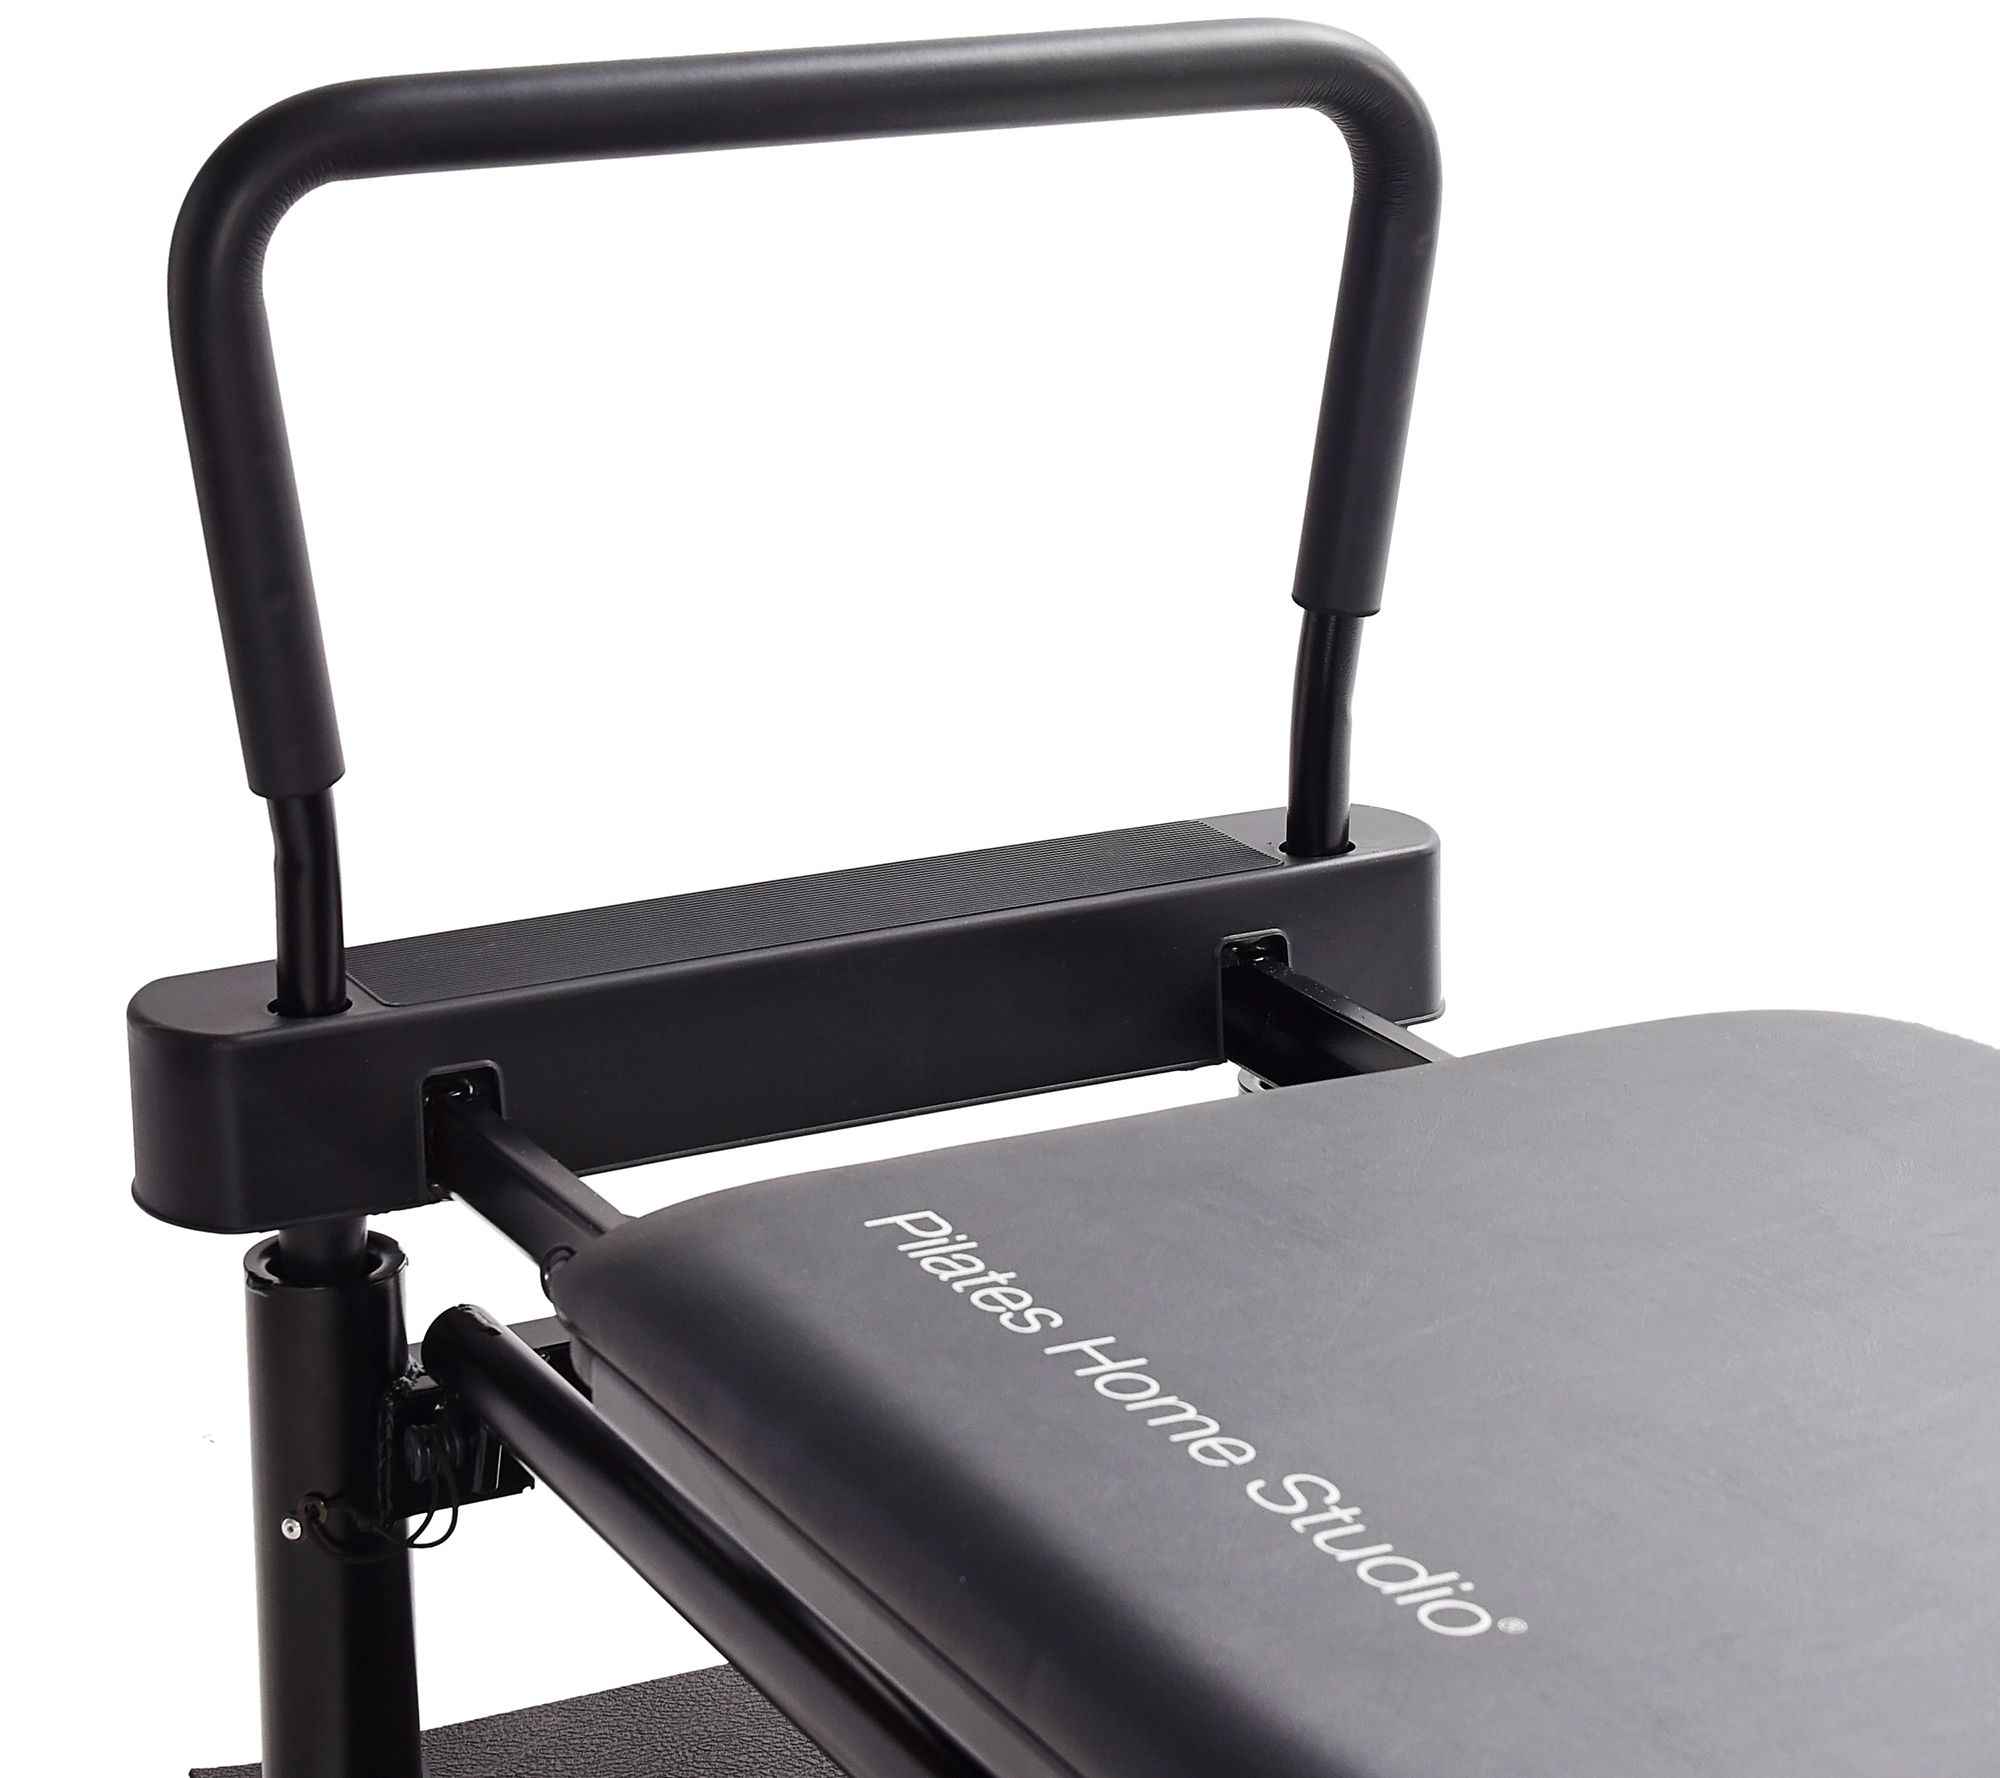 Aero Pilates Premier 700 Foldable Reformer Fitness Machine with